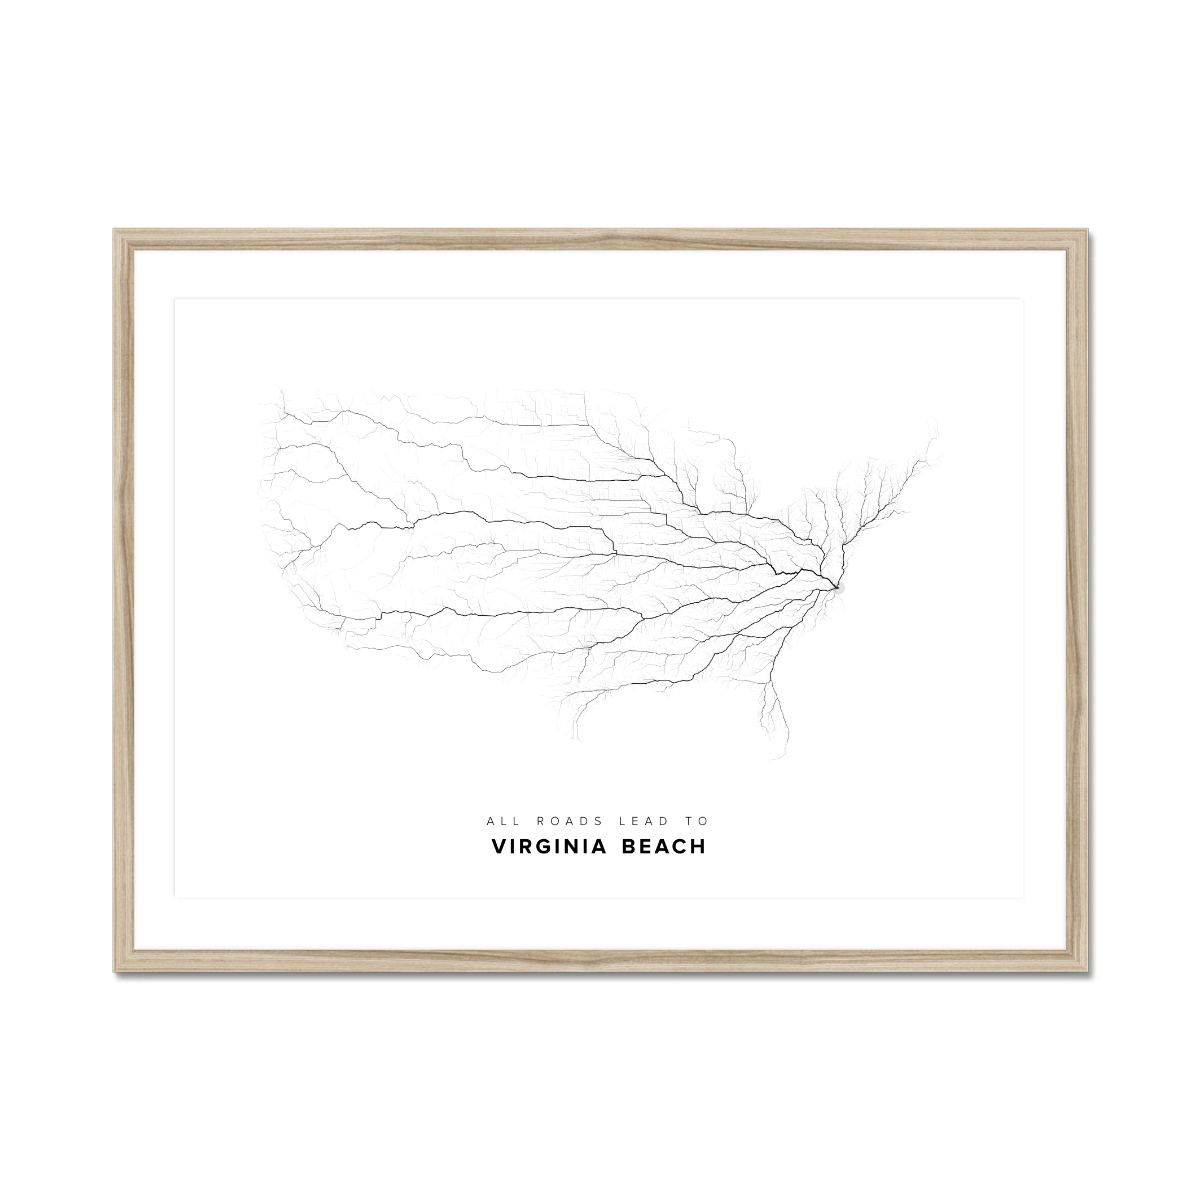 All roads lead to Virginia Beach (United States of America) Fine Art Map Print